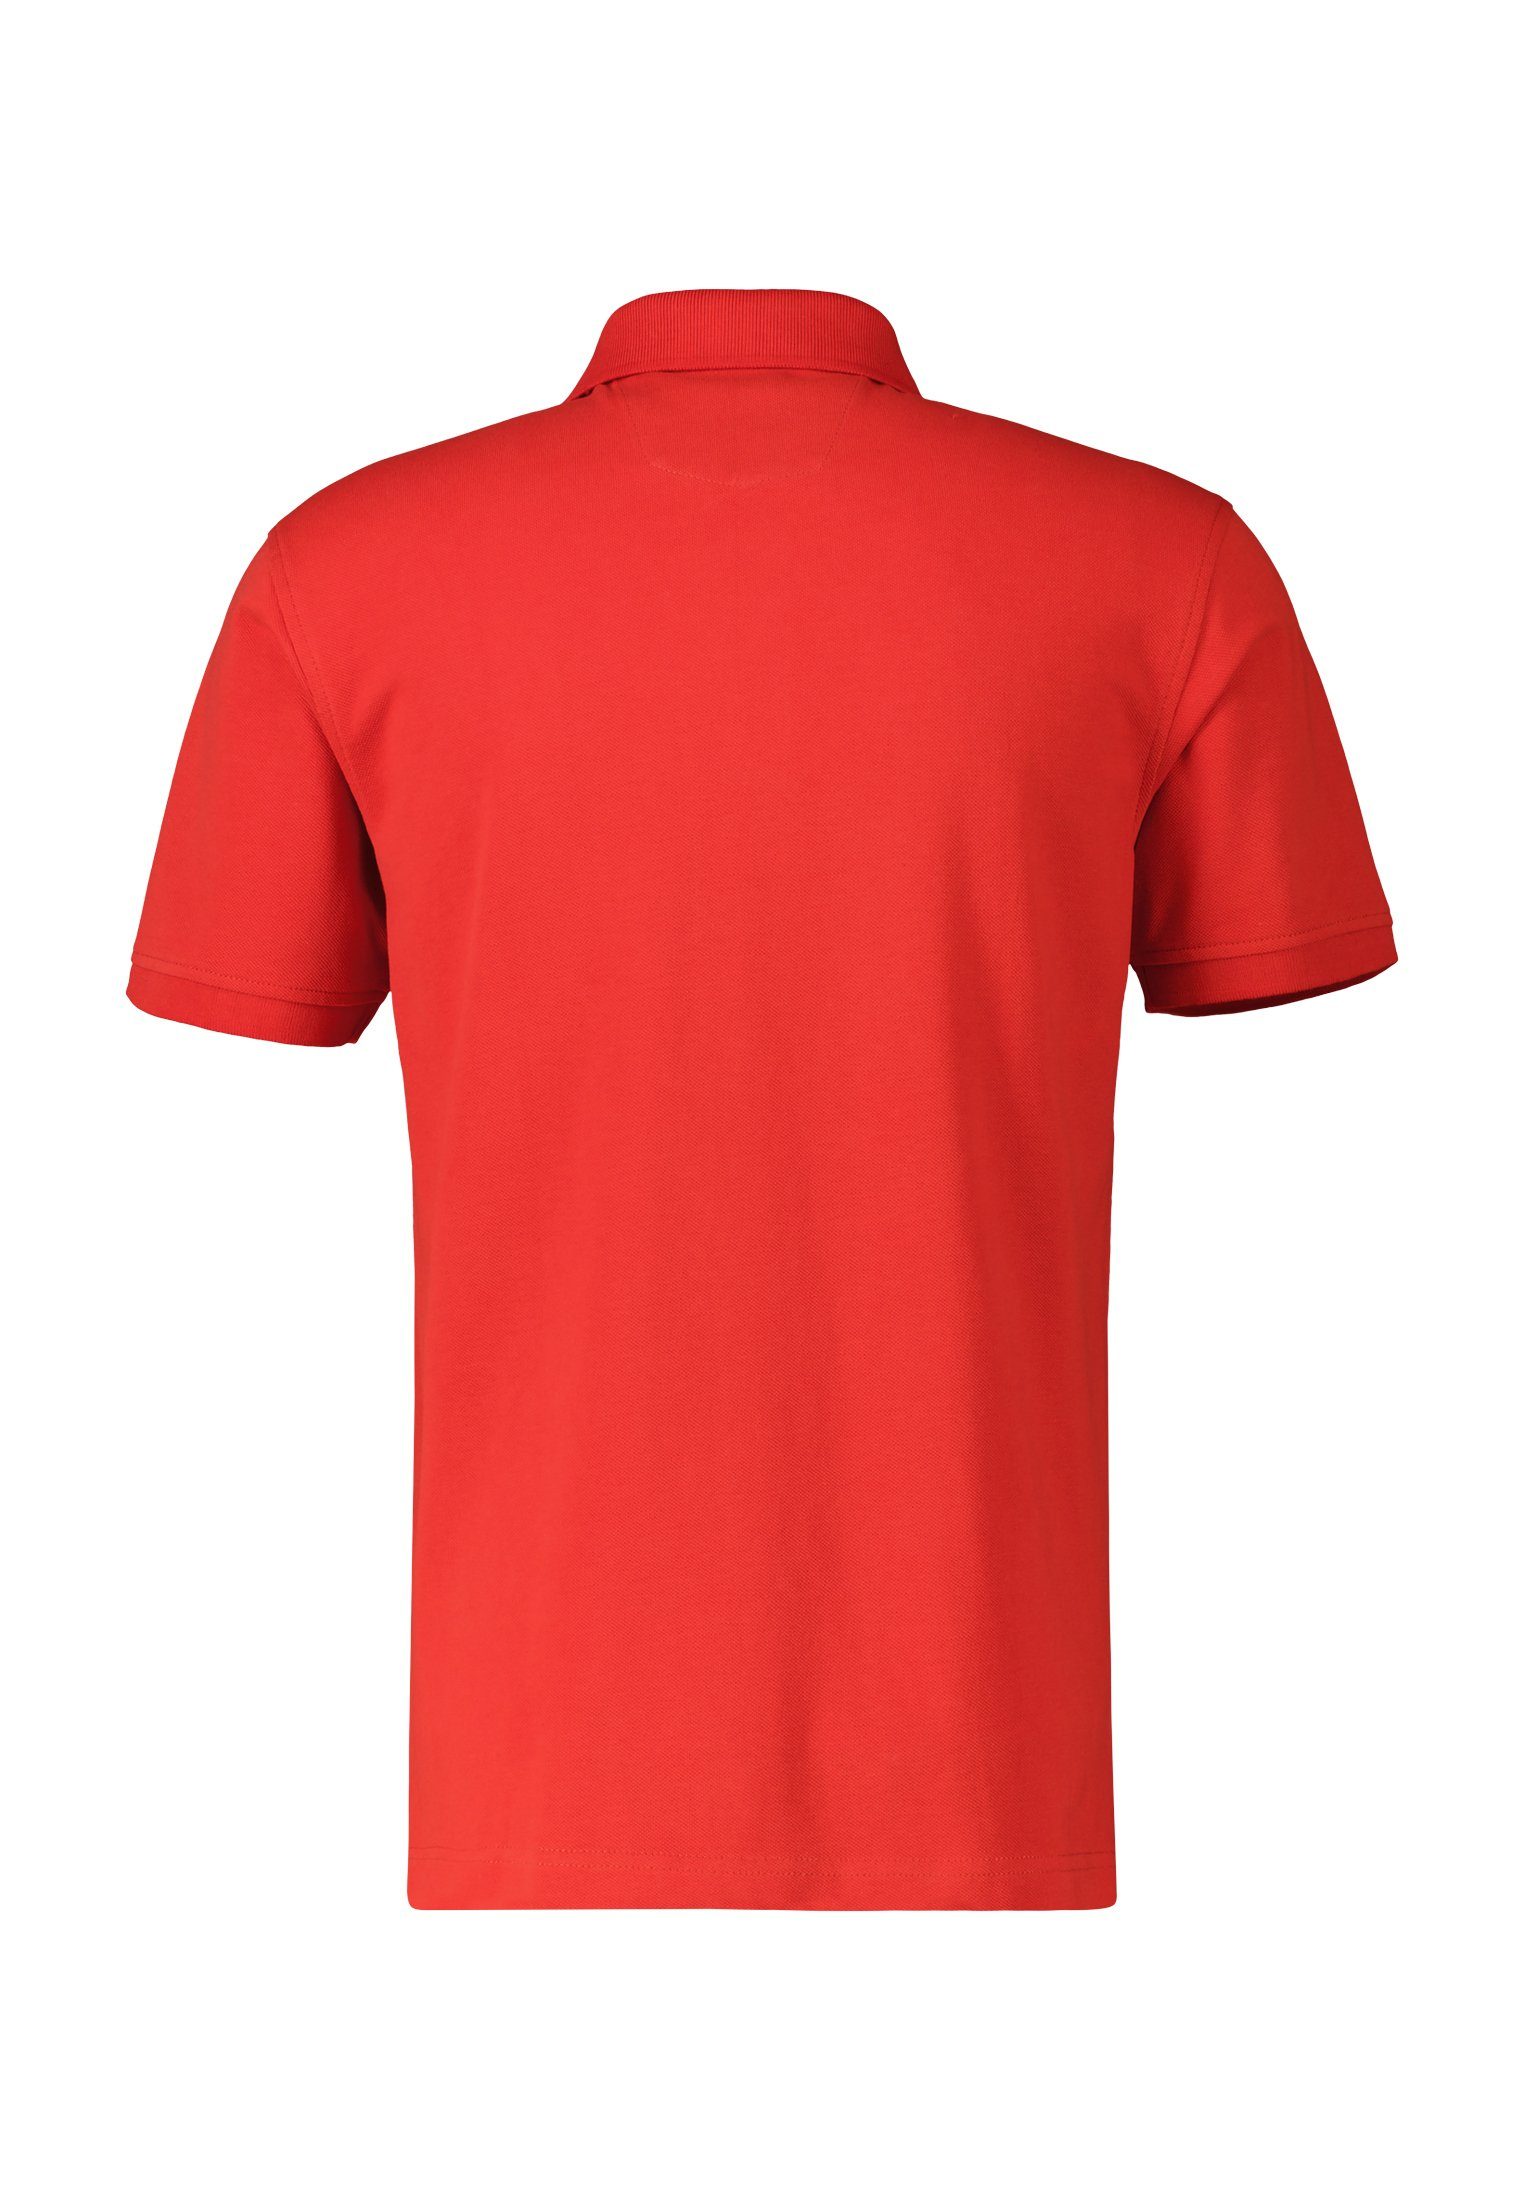 LERROS Poloshirt vielen Polo-Shirt in LAVA LERROS Farben RED Basic